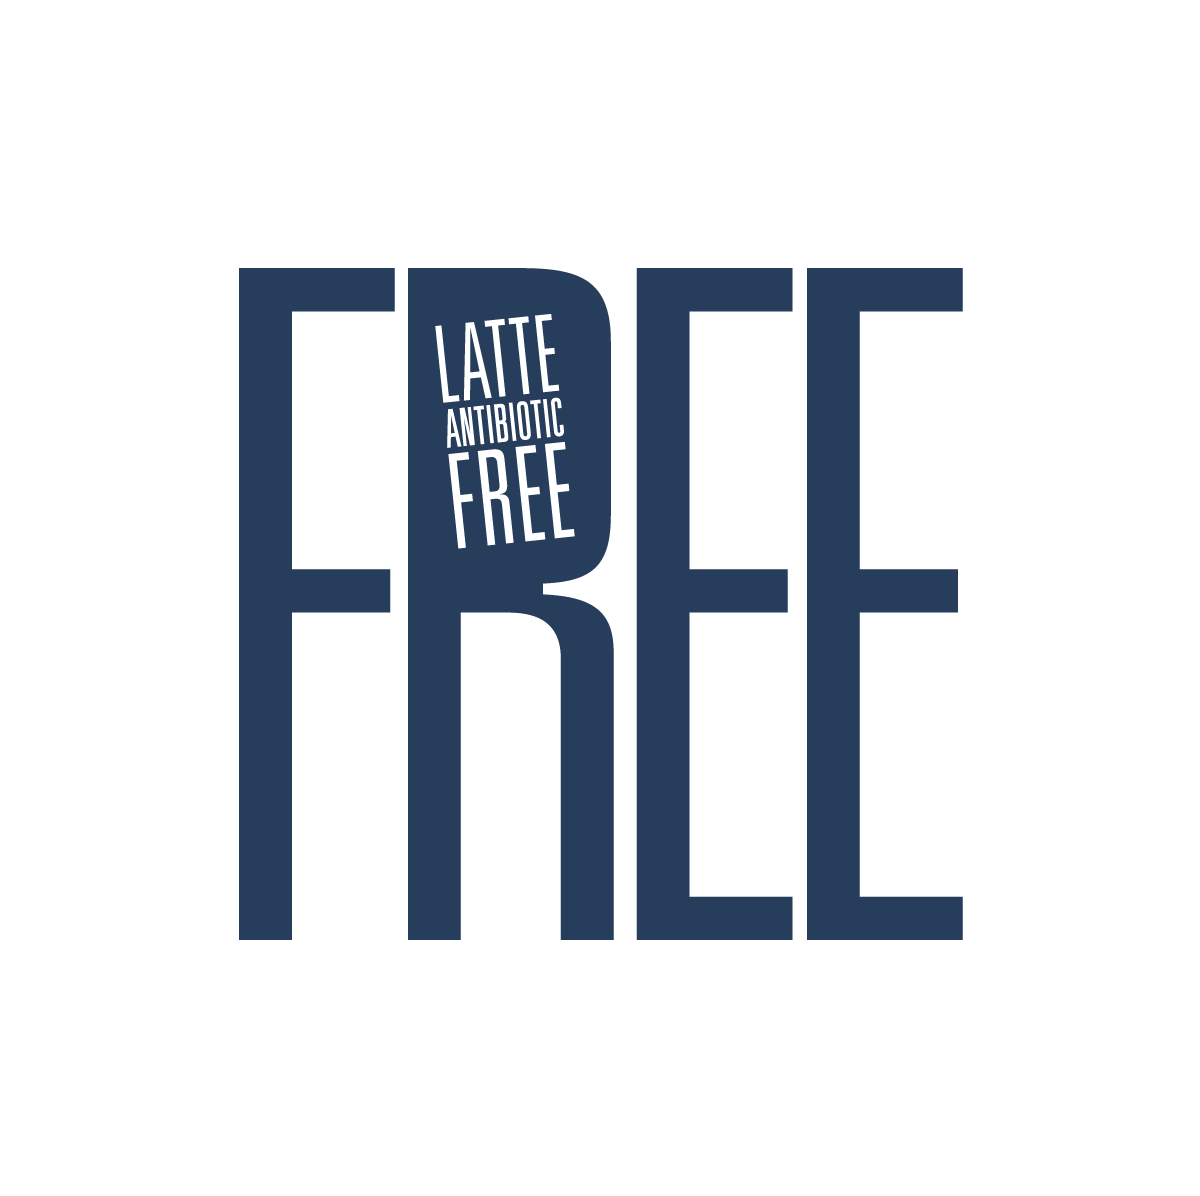 Latte UHT intero Antibiotic FREE Certificato - Latte FREE®